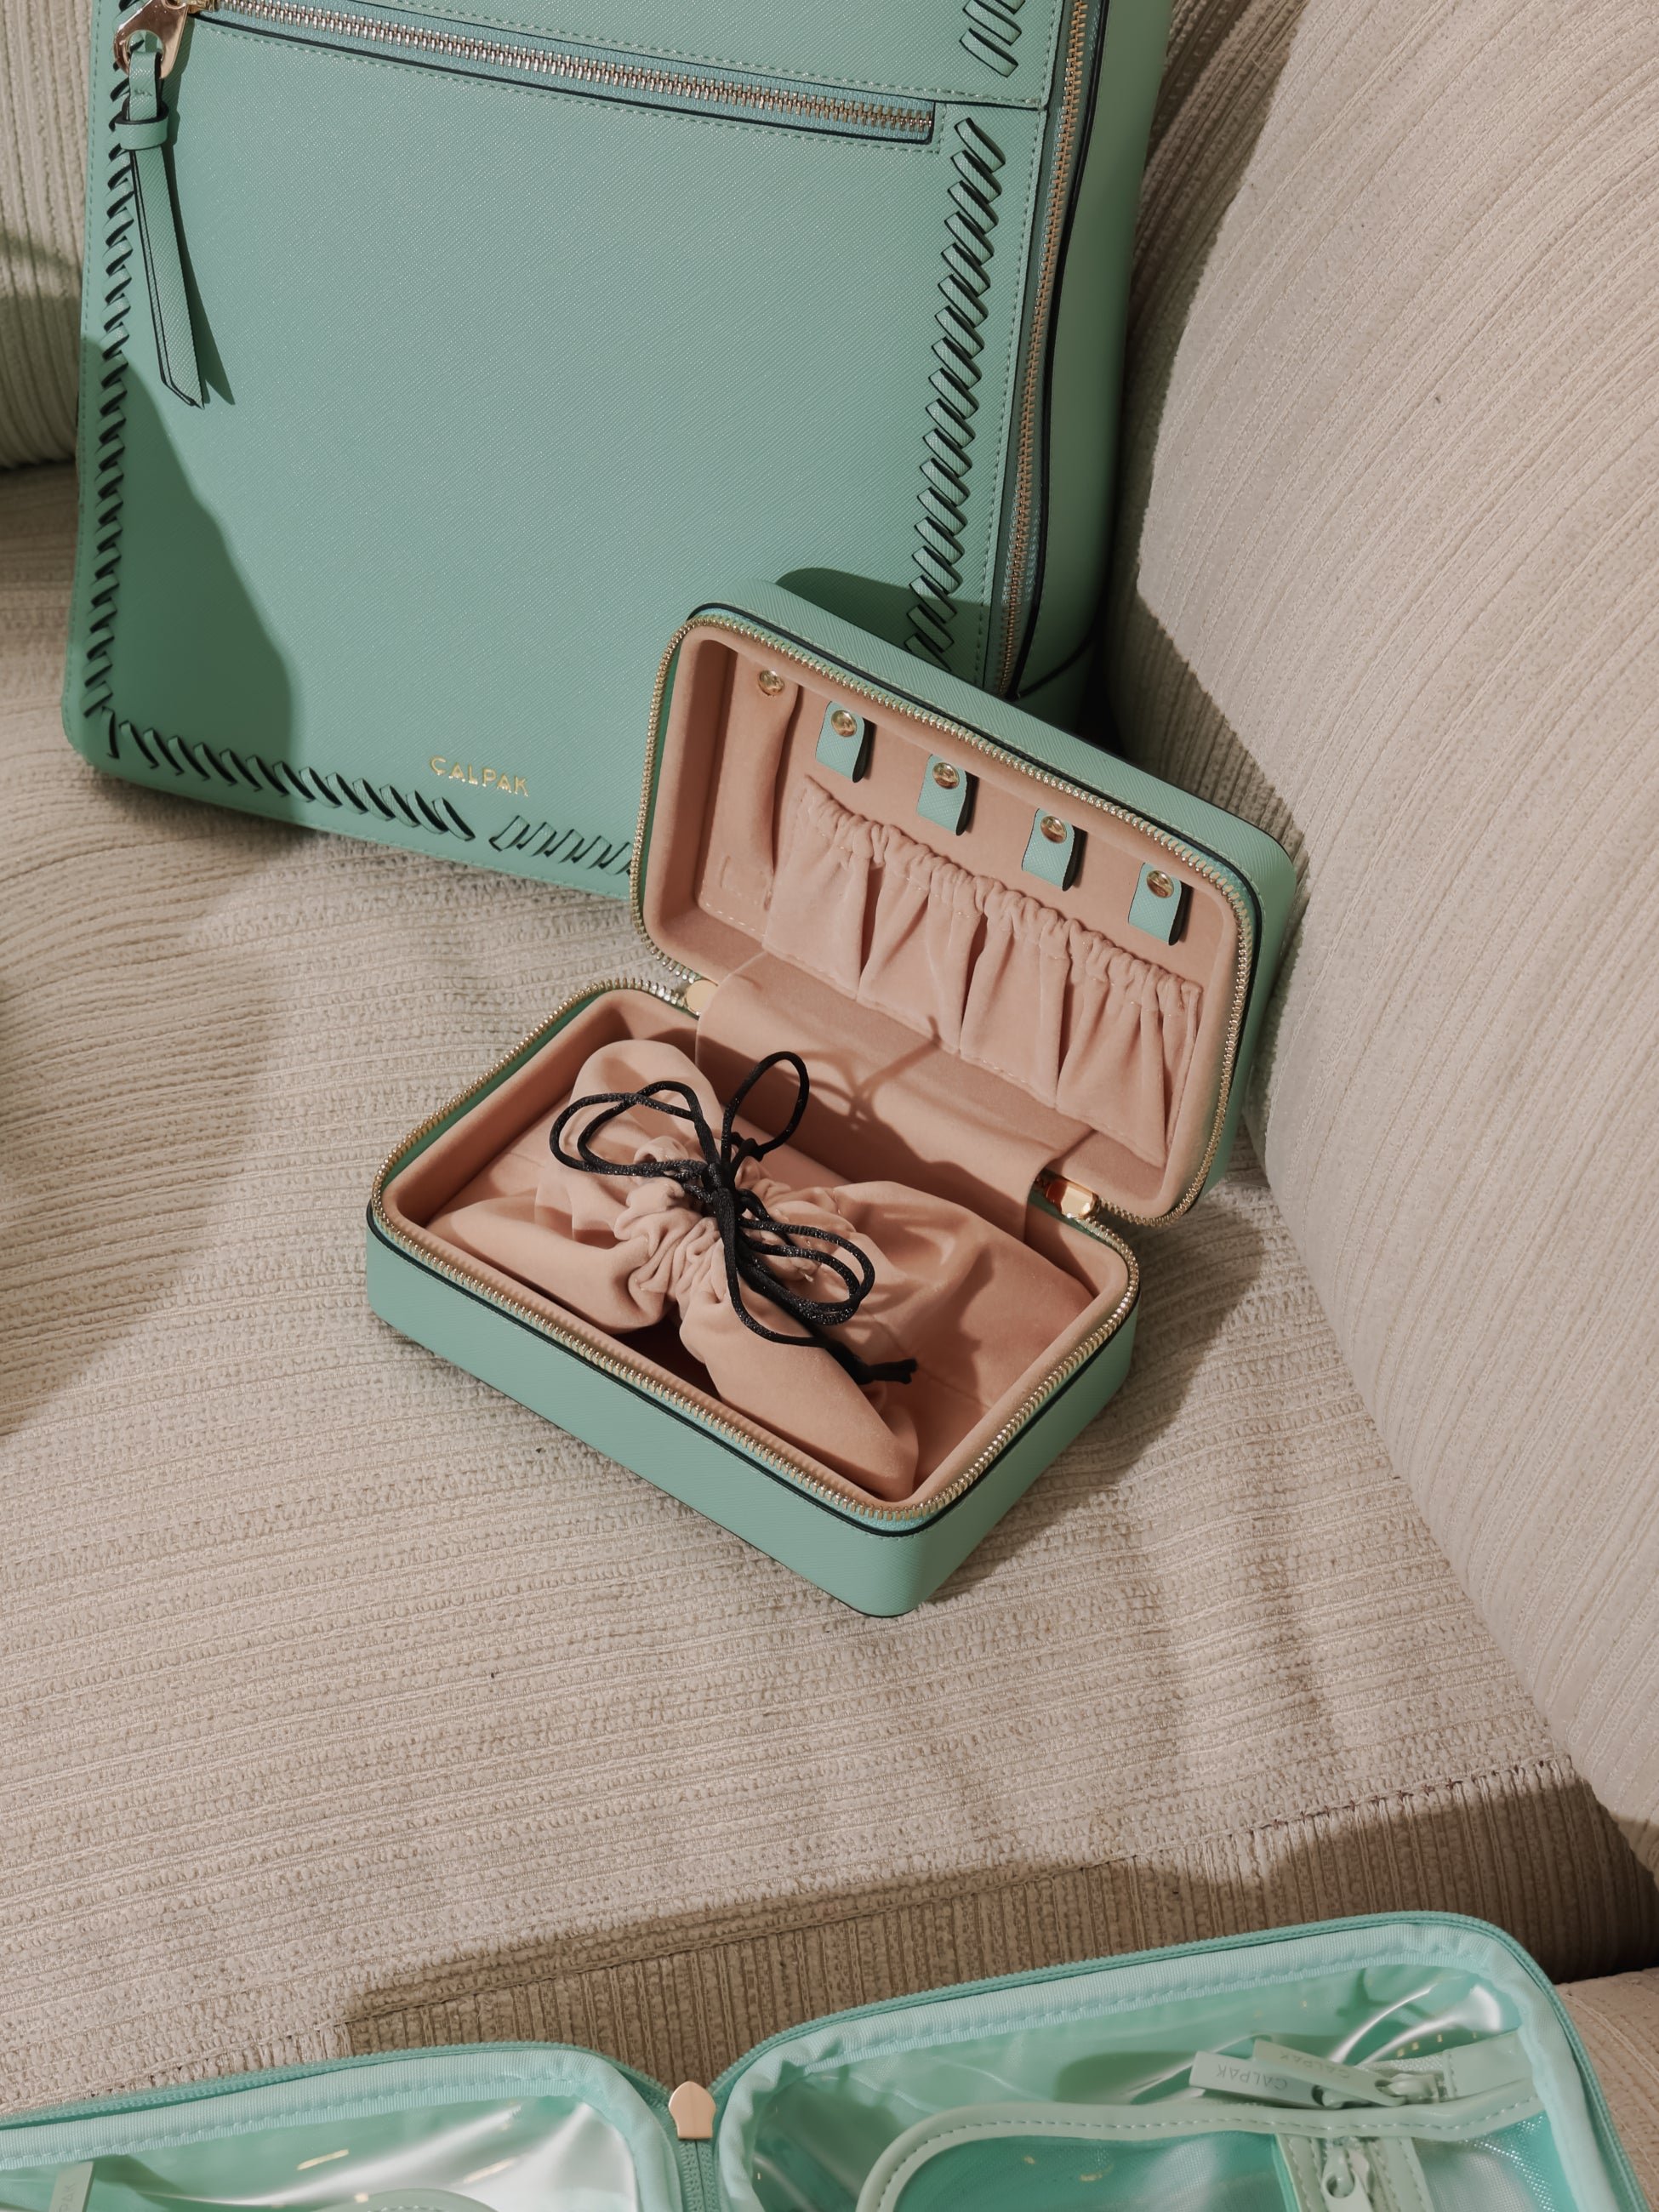 CALPAK travel jewelry case with drawstring pouch in aqua